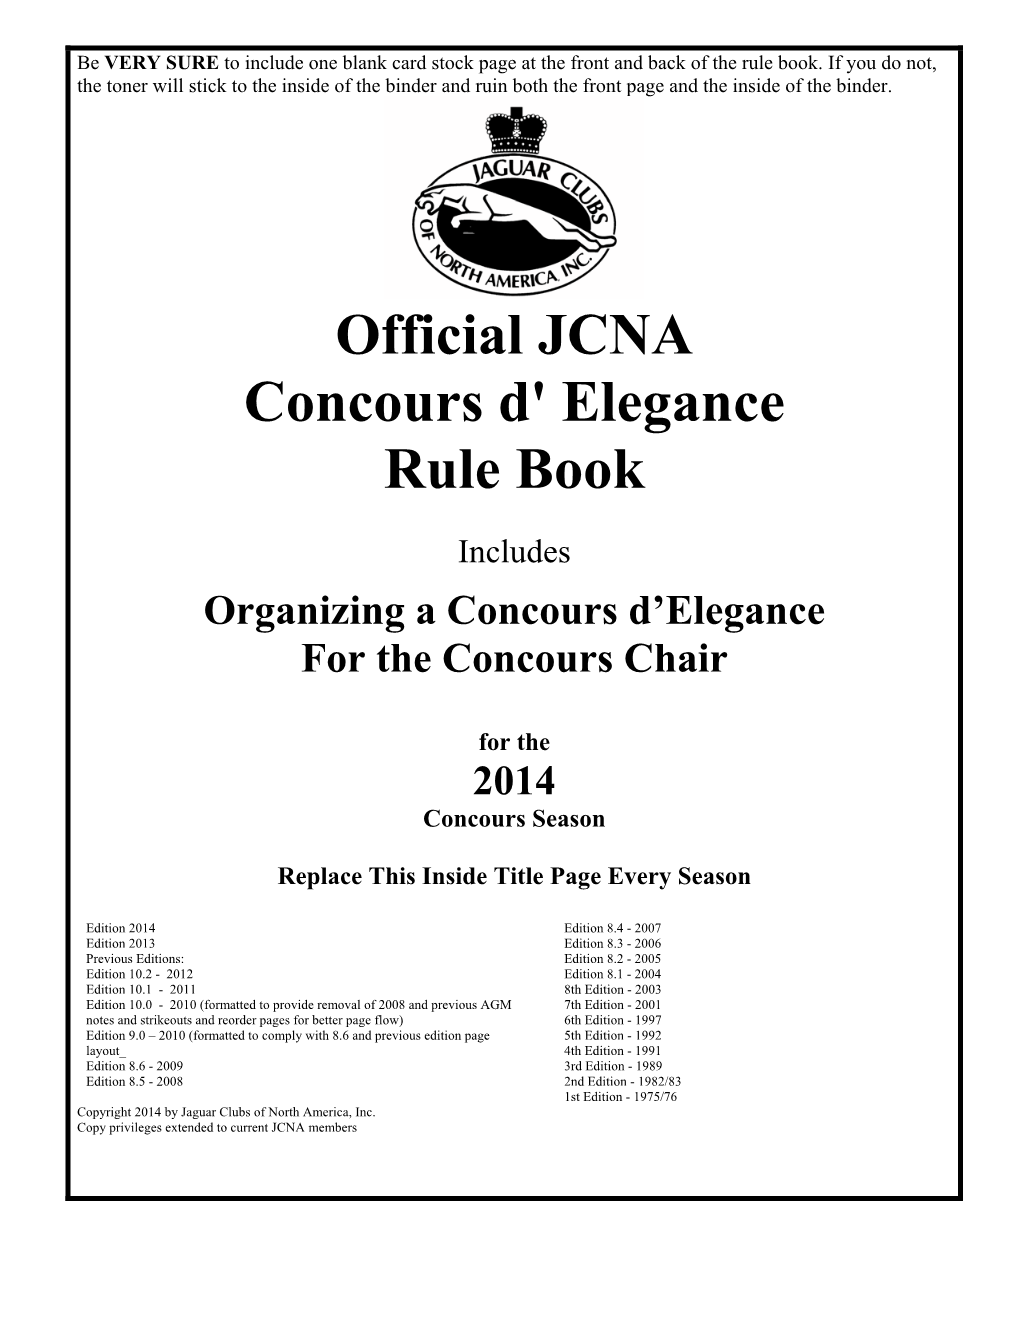 Official JCNA Concours D' Elegance Rule Book